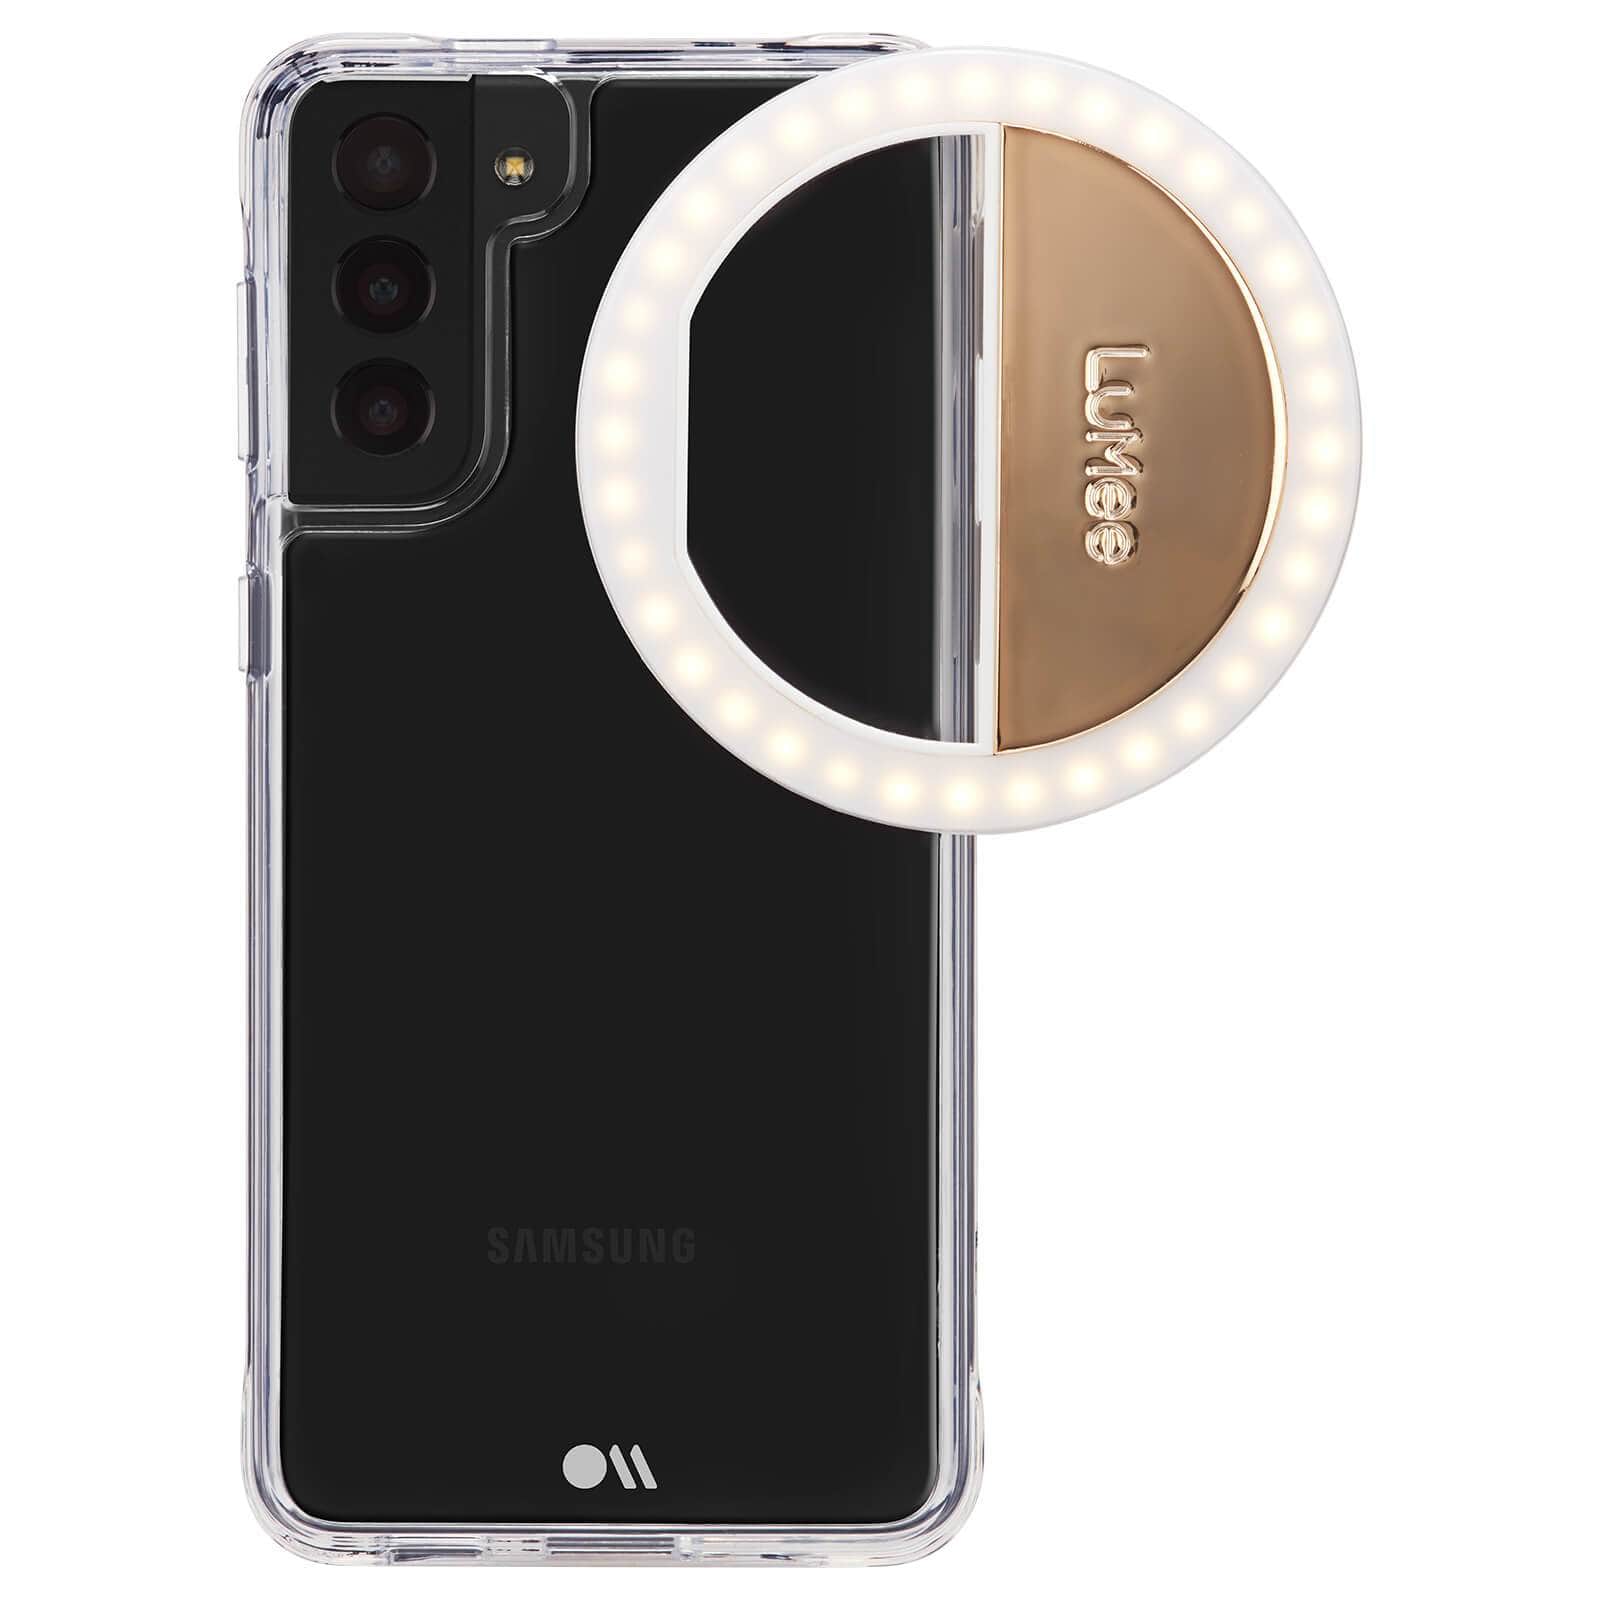 Clip on for better selfie lighting on Samsung device. color::Gold